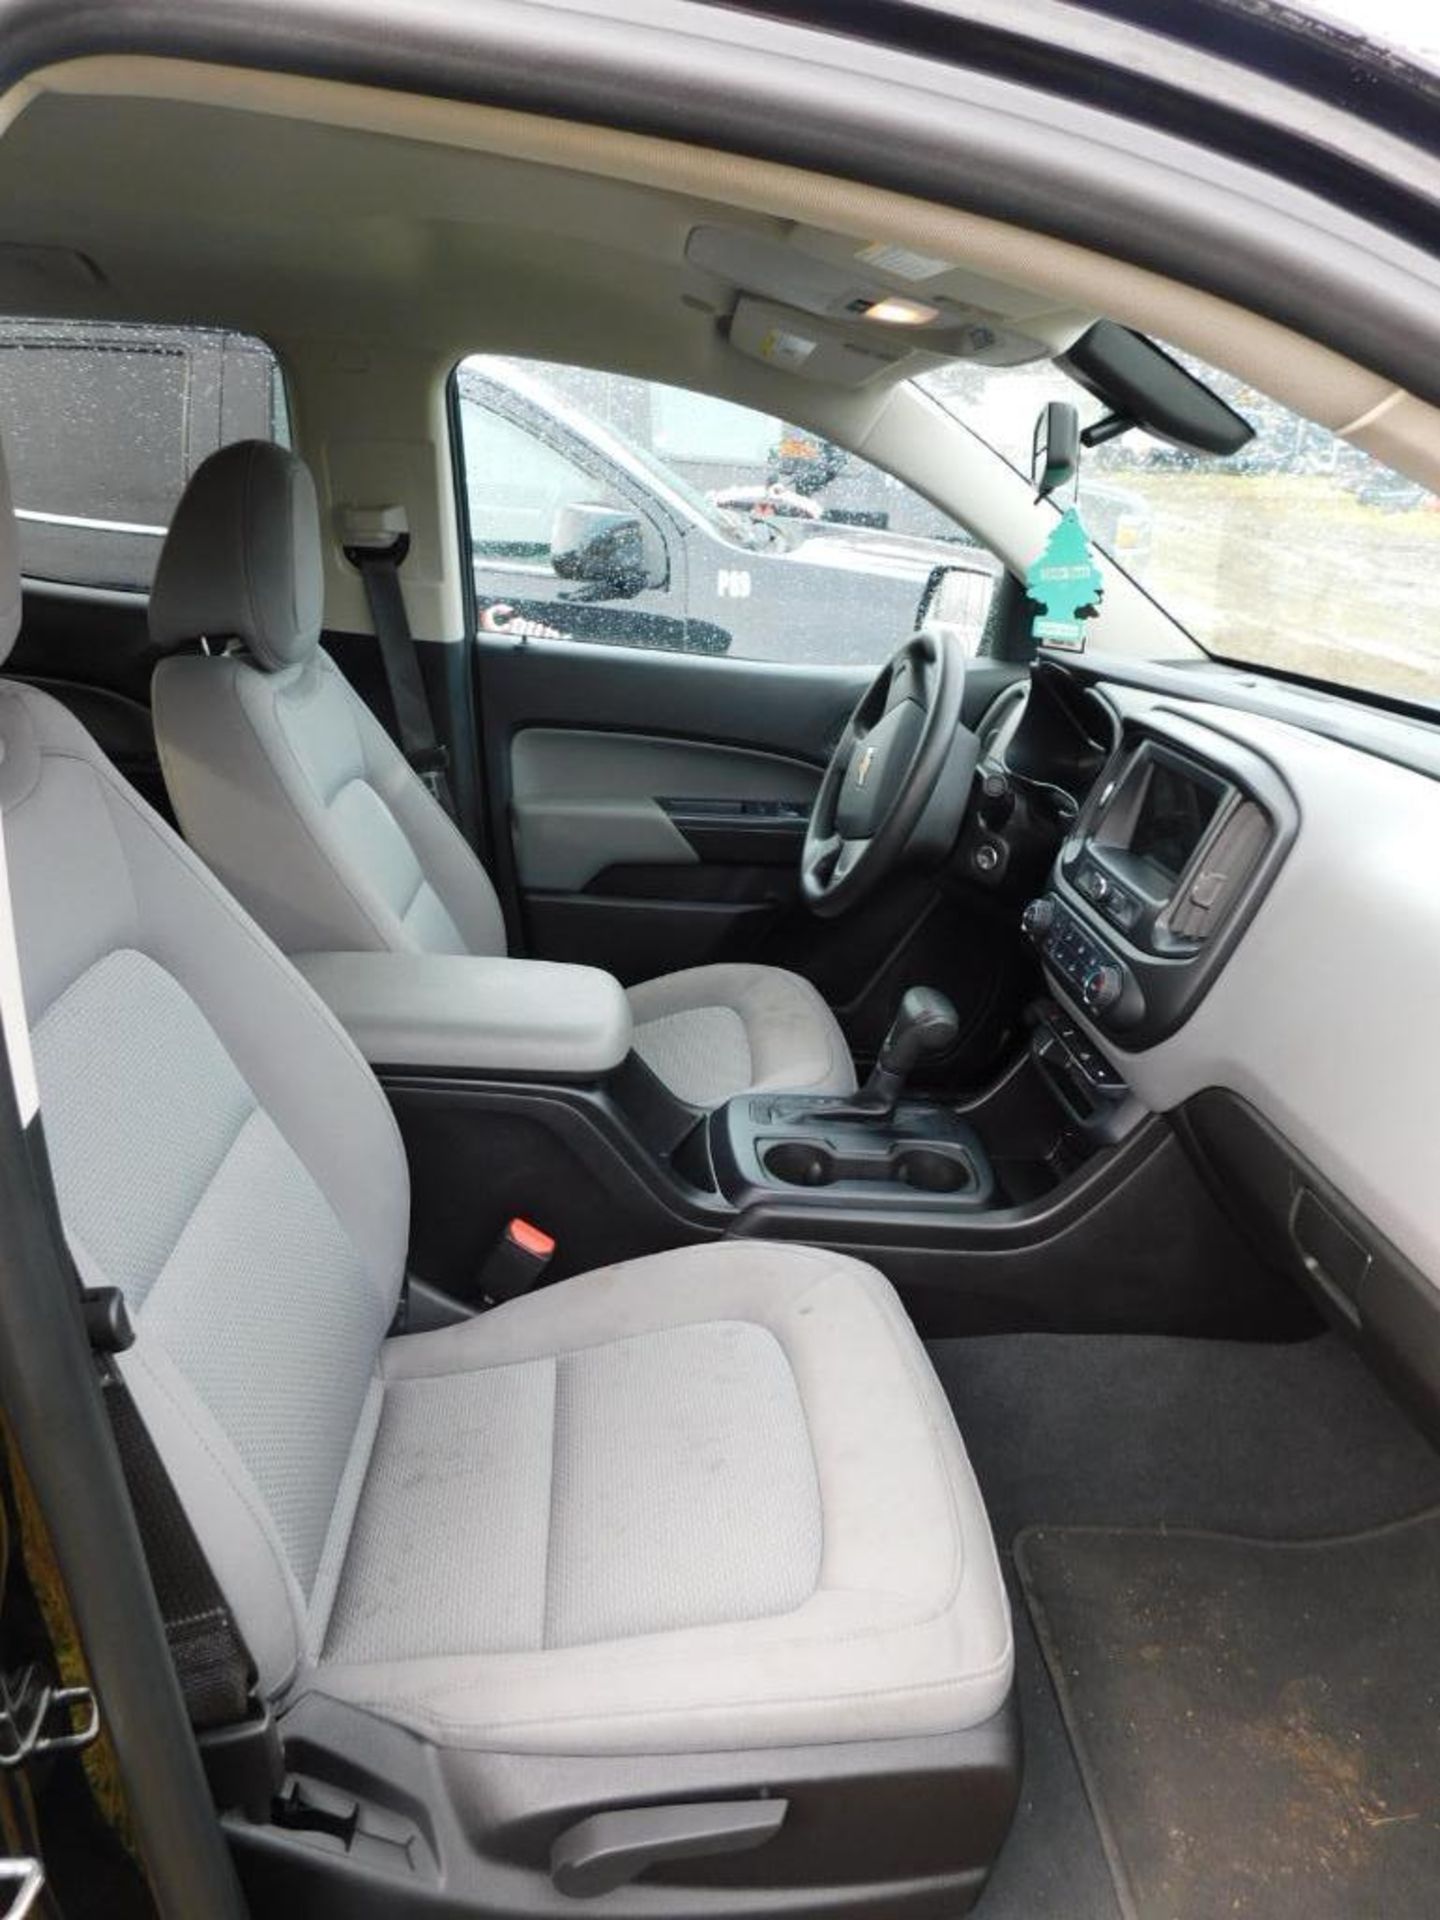 2019 Chevy Colorado Crew Cab, 4-Wheel Drive, 3.6 Liter, V6, Gasoline Motor, Auto, 5' Bed w/Toolbox, - Image 9 of 11